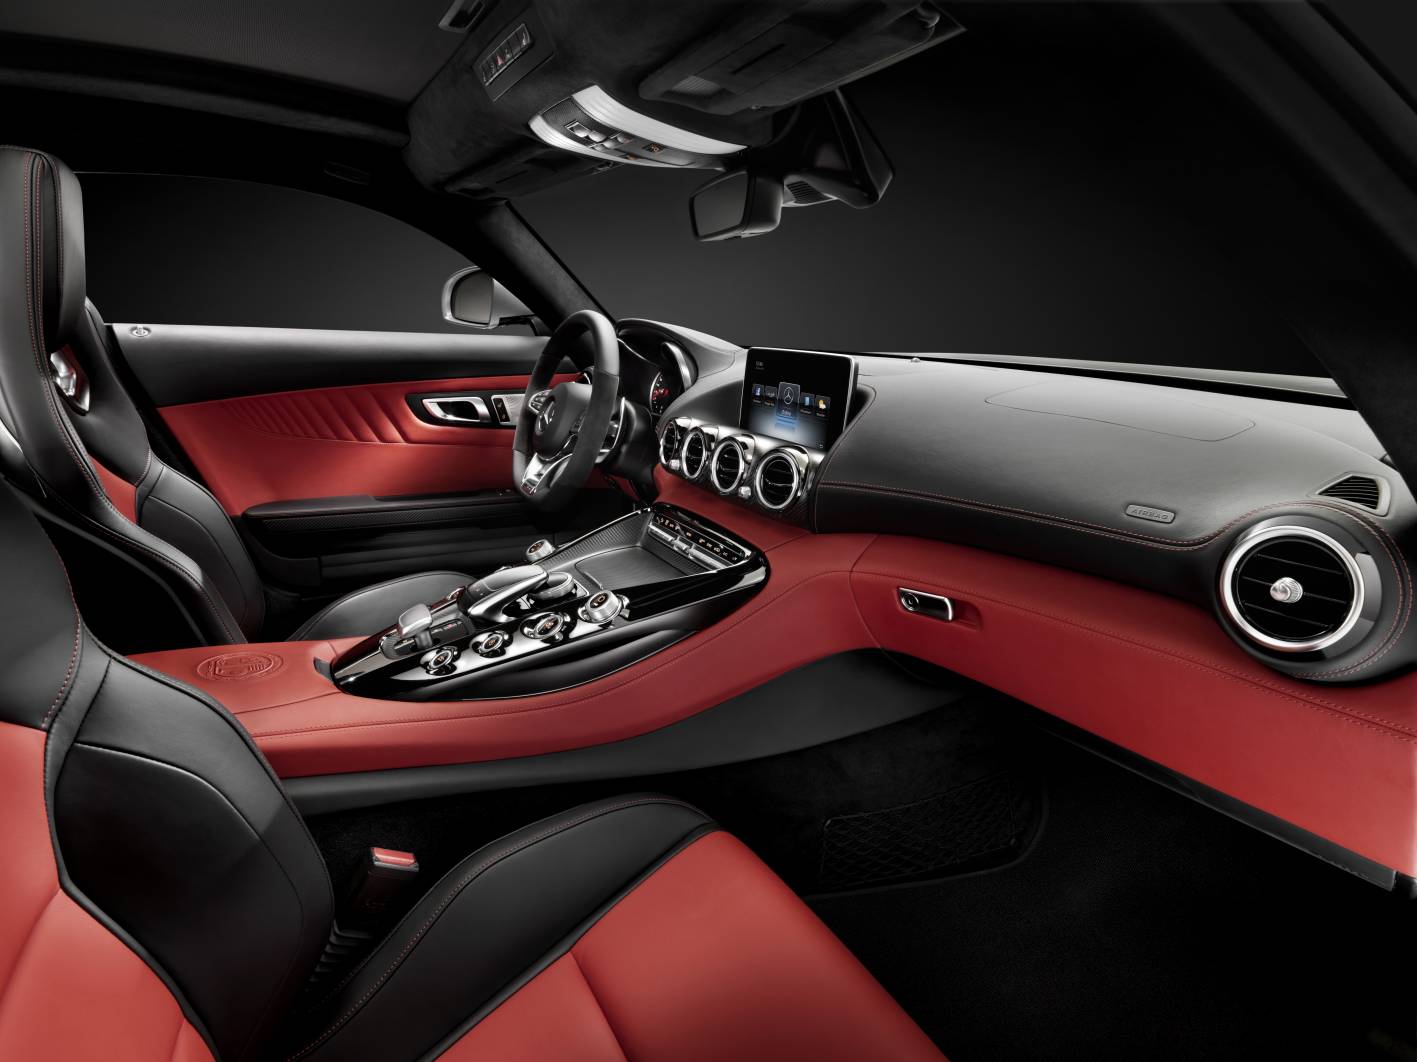 Mercedes-AMG GT interior revealed, name confirmed